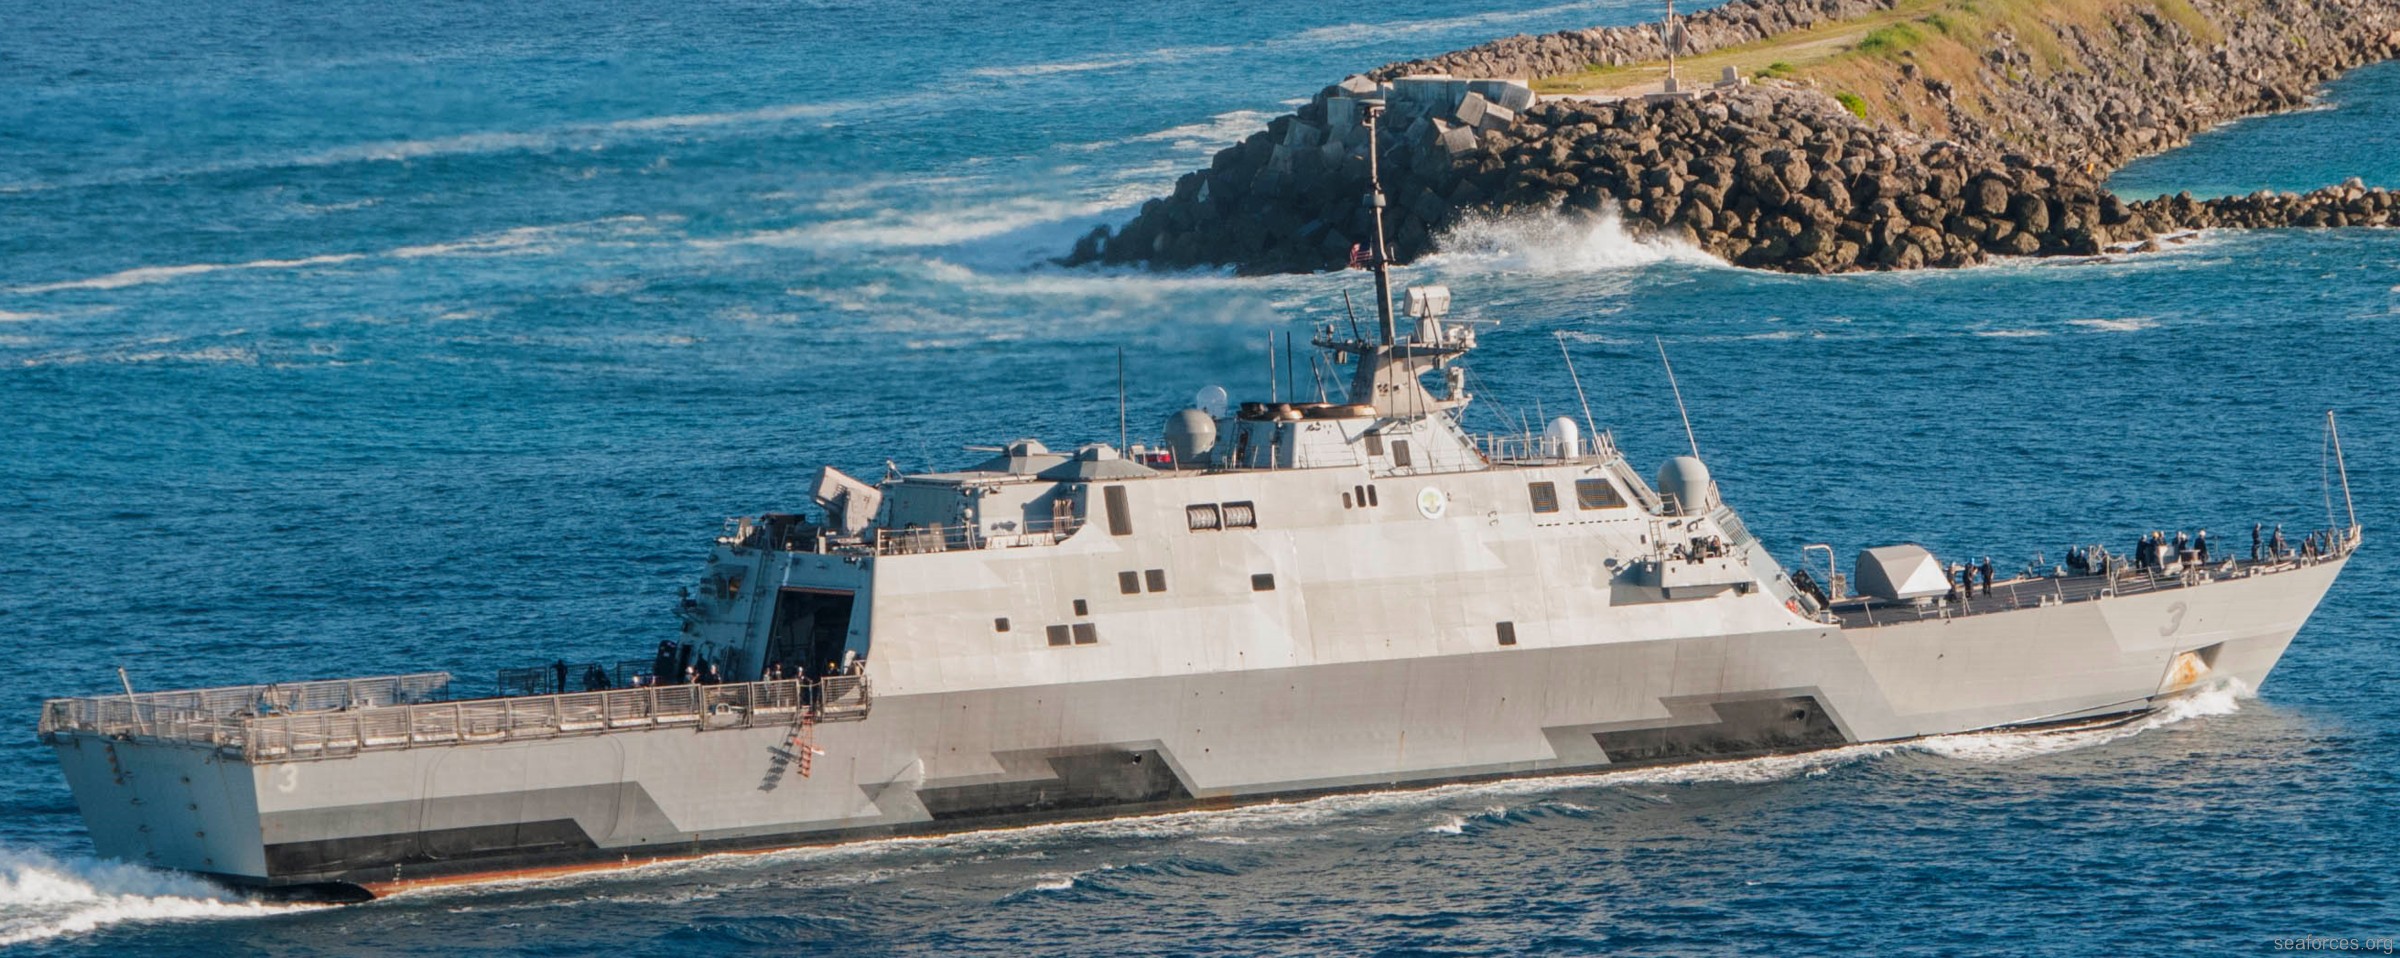 lcs-3 uss fort worth littoral combat ship freedom class us navy 32 santa rita guam